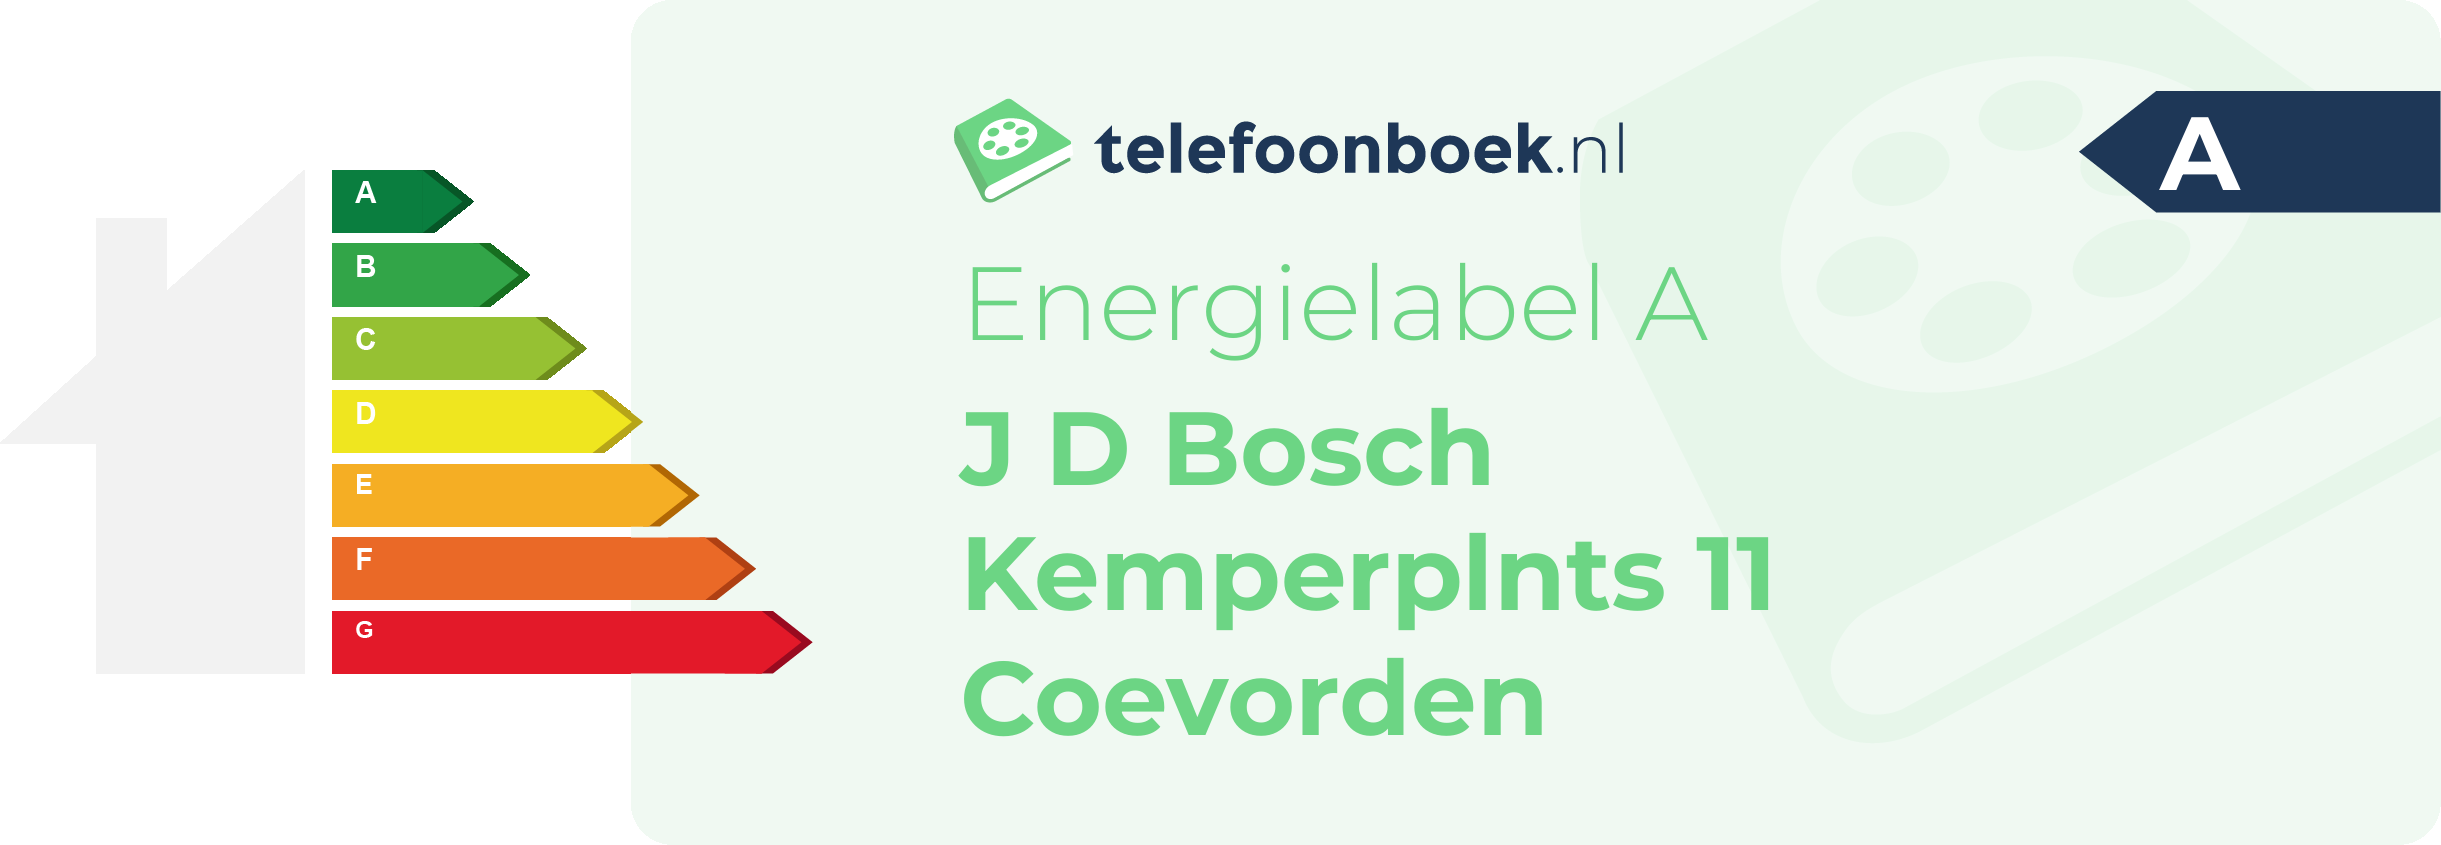 Energielabel J D Bosch Kemperplnts 11 Coevorden